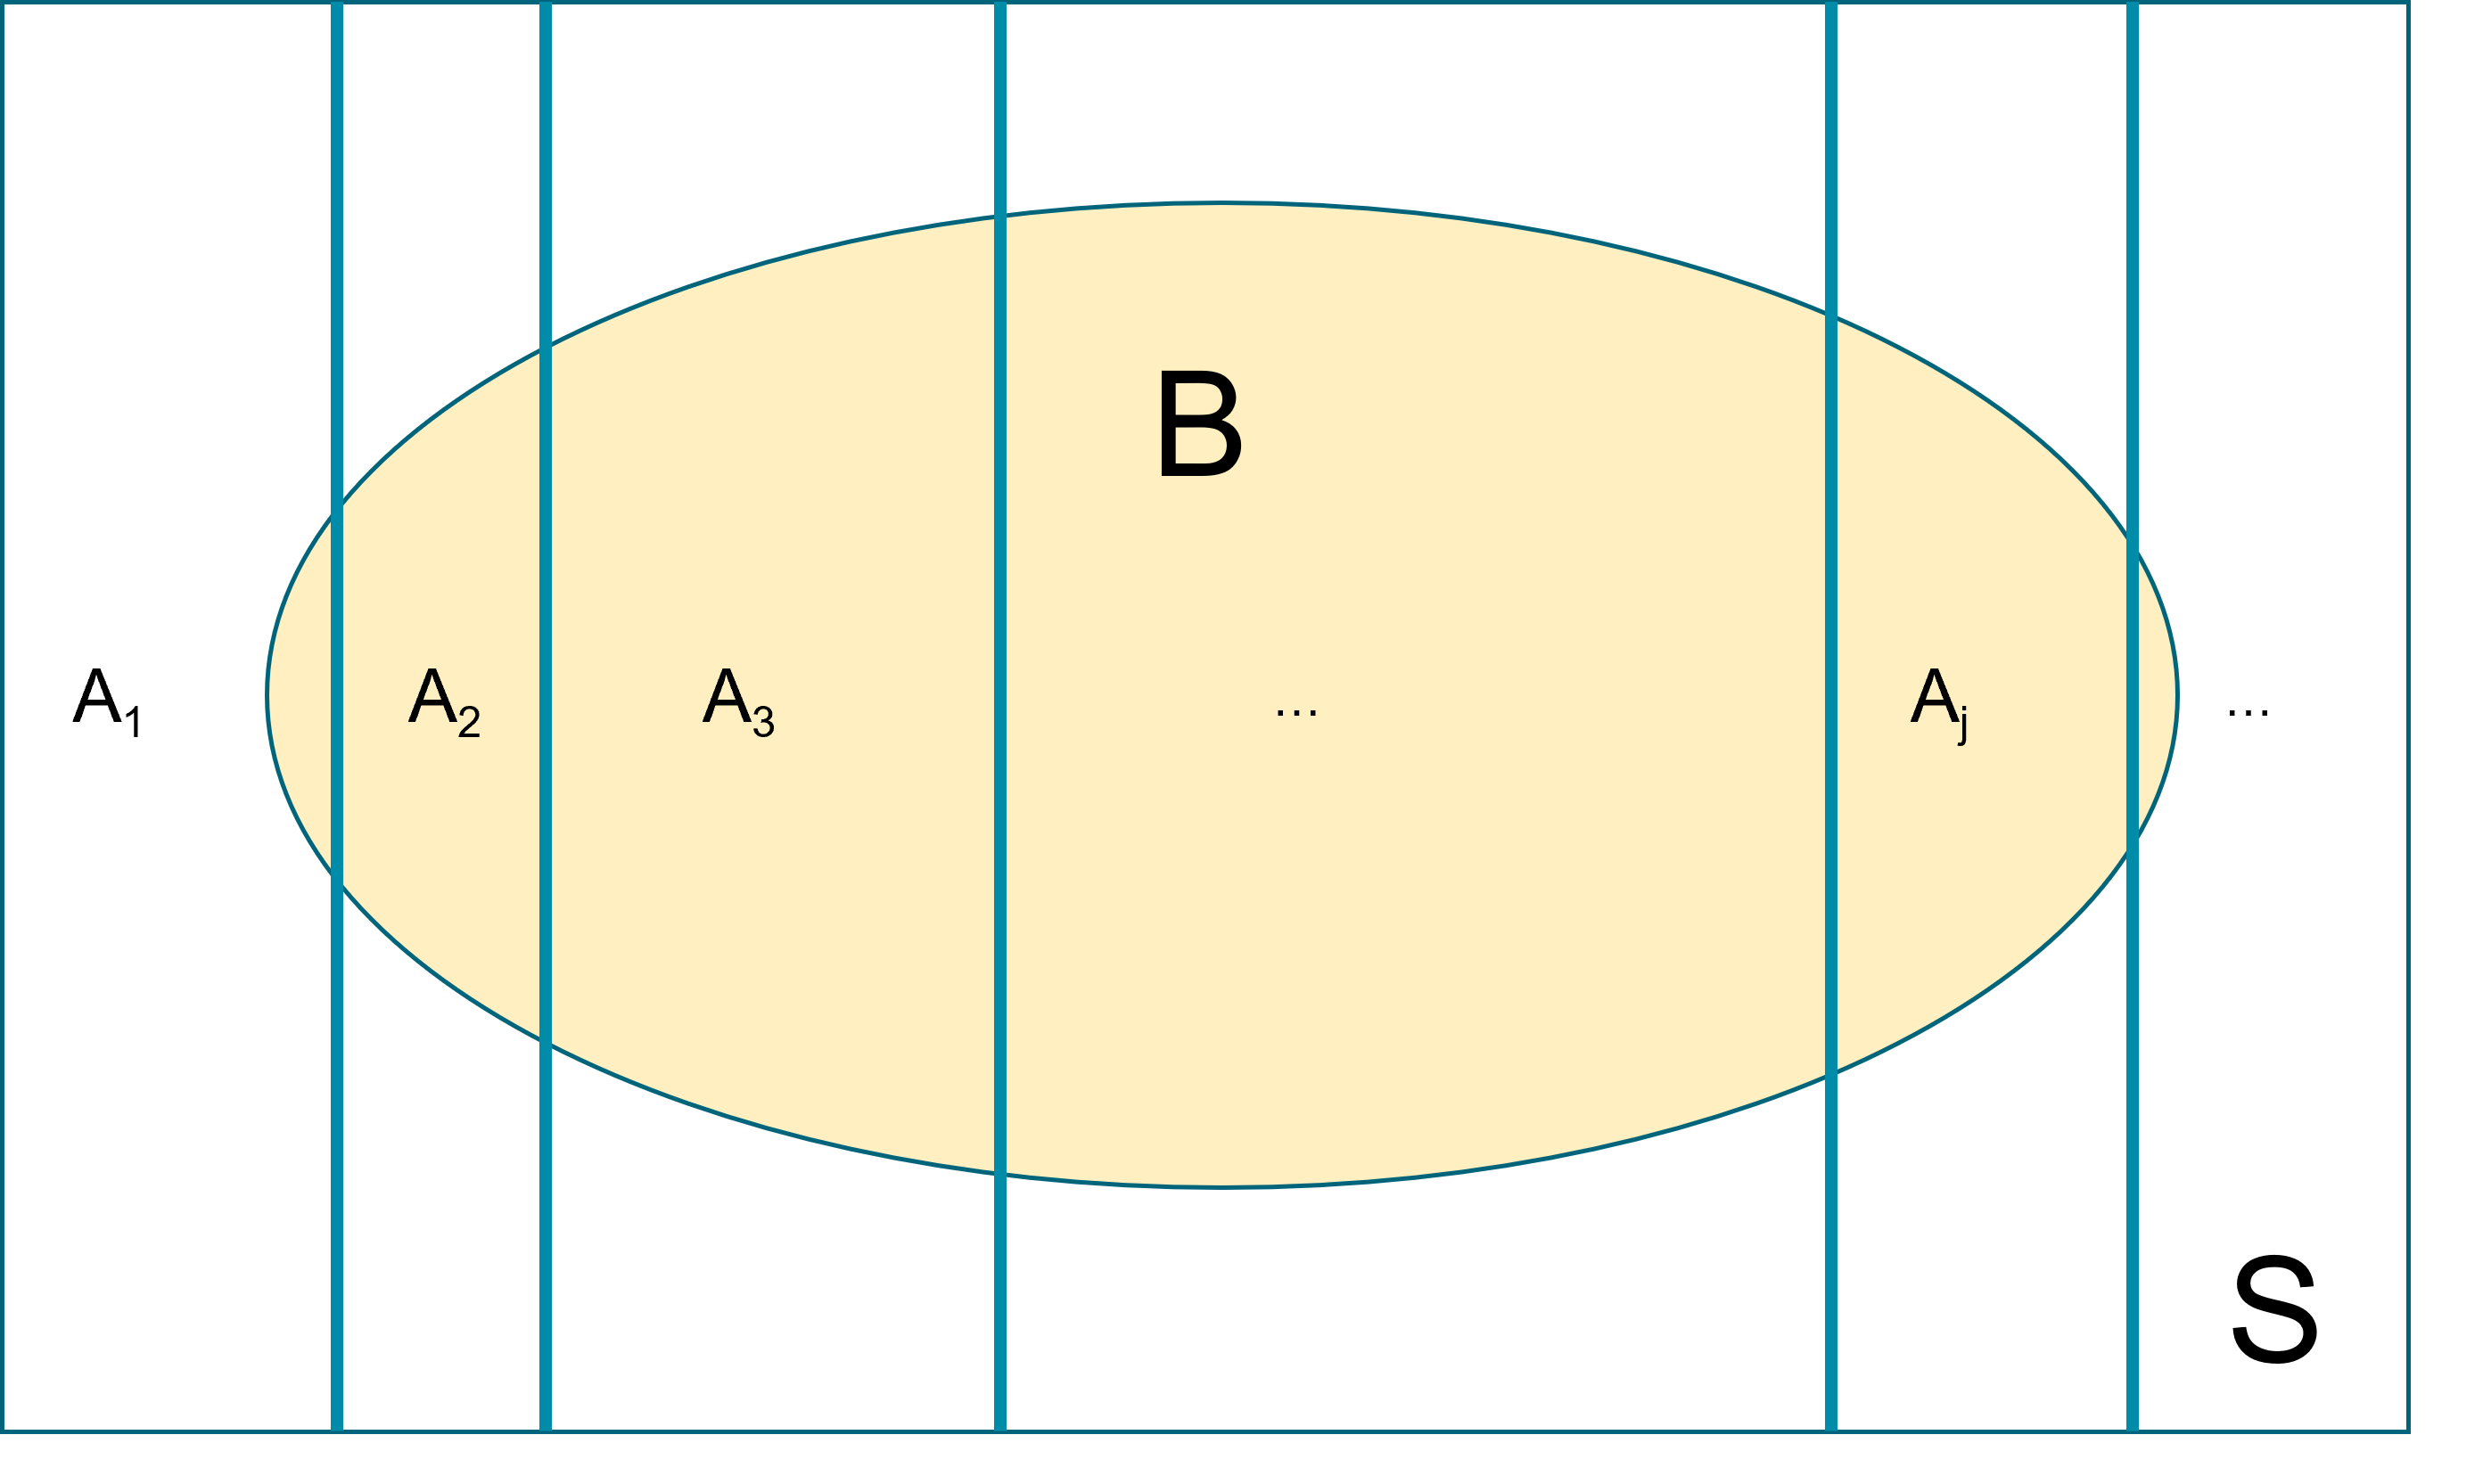 Demonstrate Law of total probabiliy using Venn Diagram